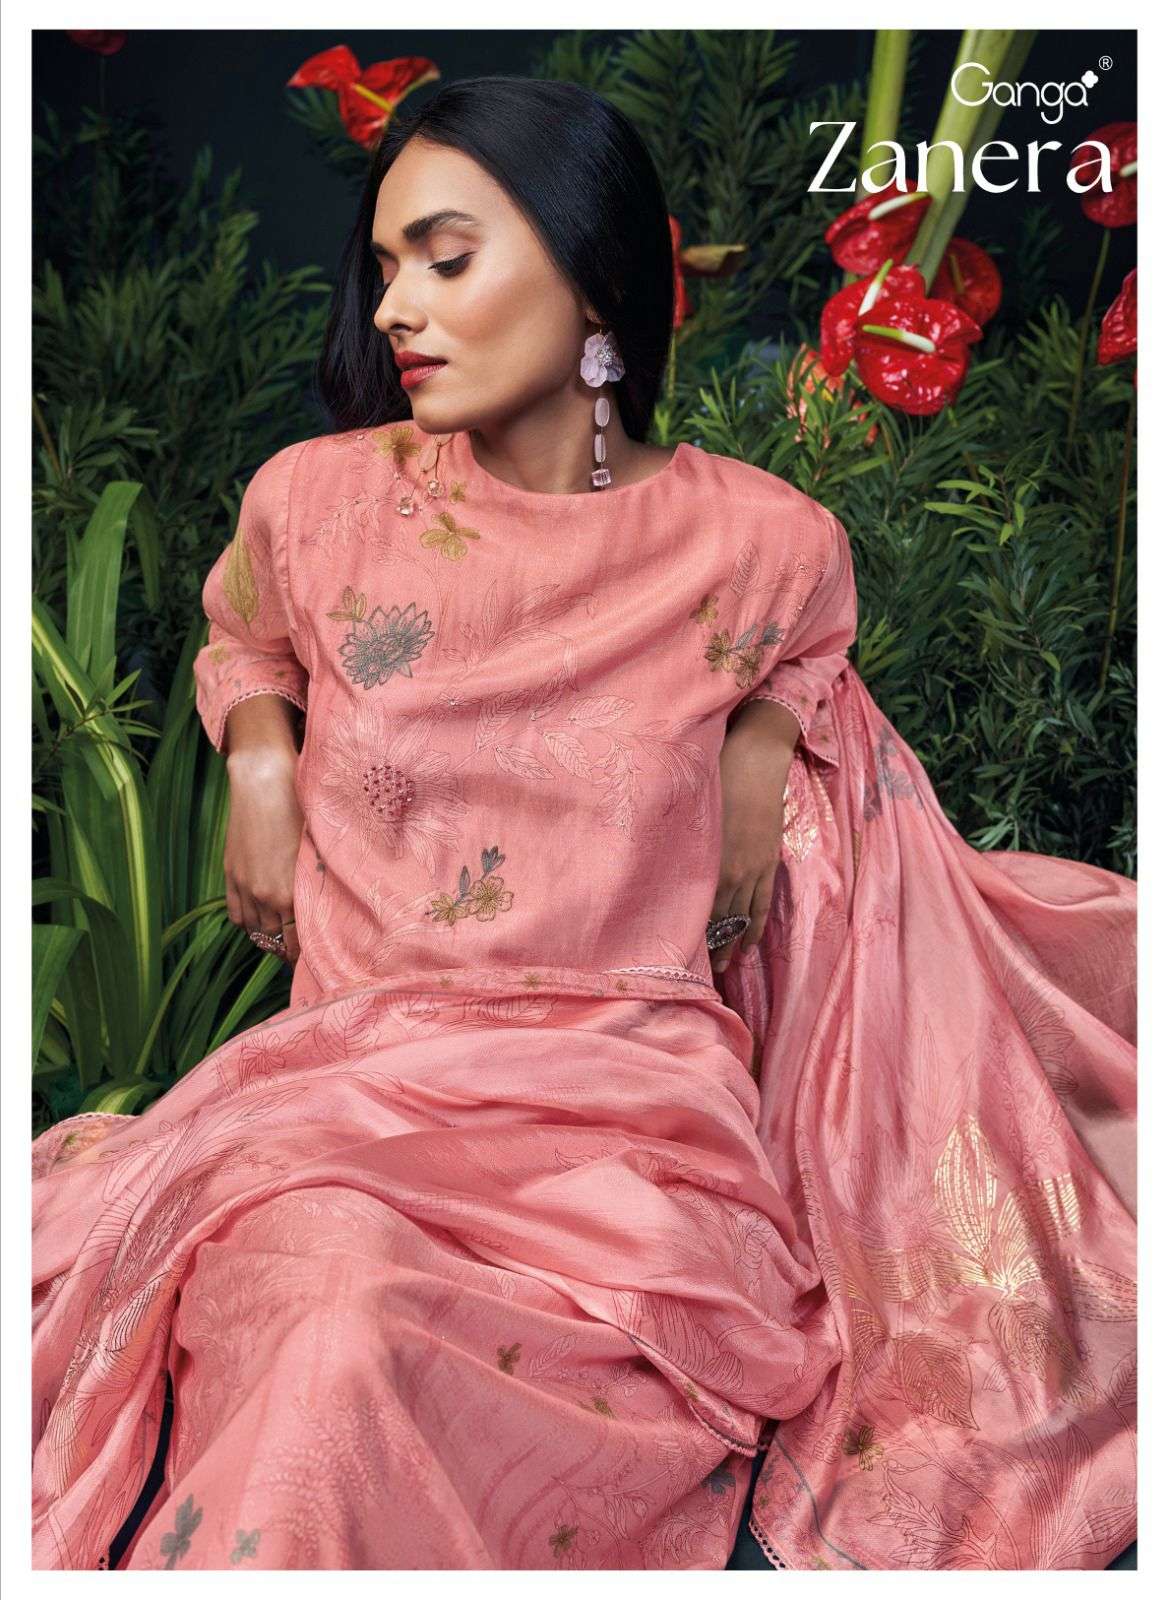 Ganga Zanera Branded Premium Designs Silk Occasion Wear Dress Suppliers 